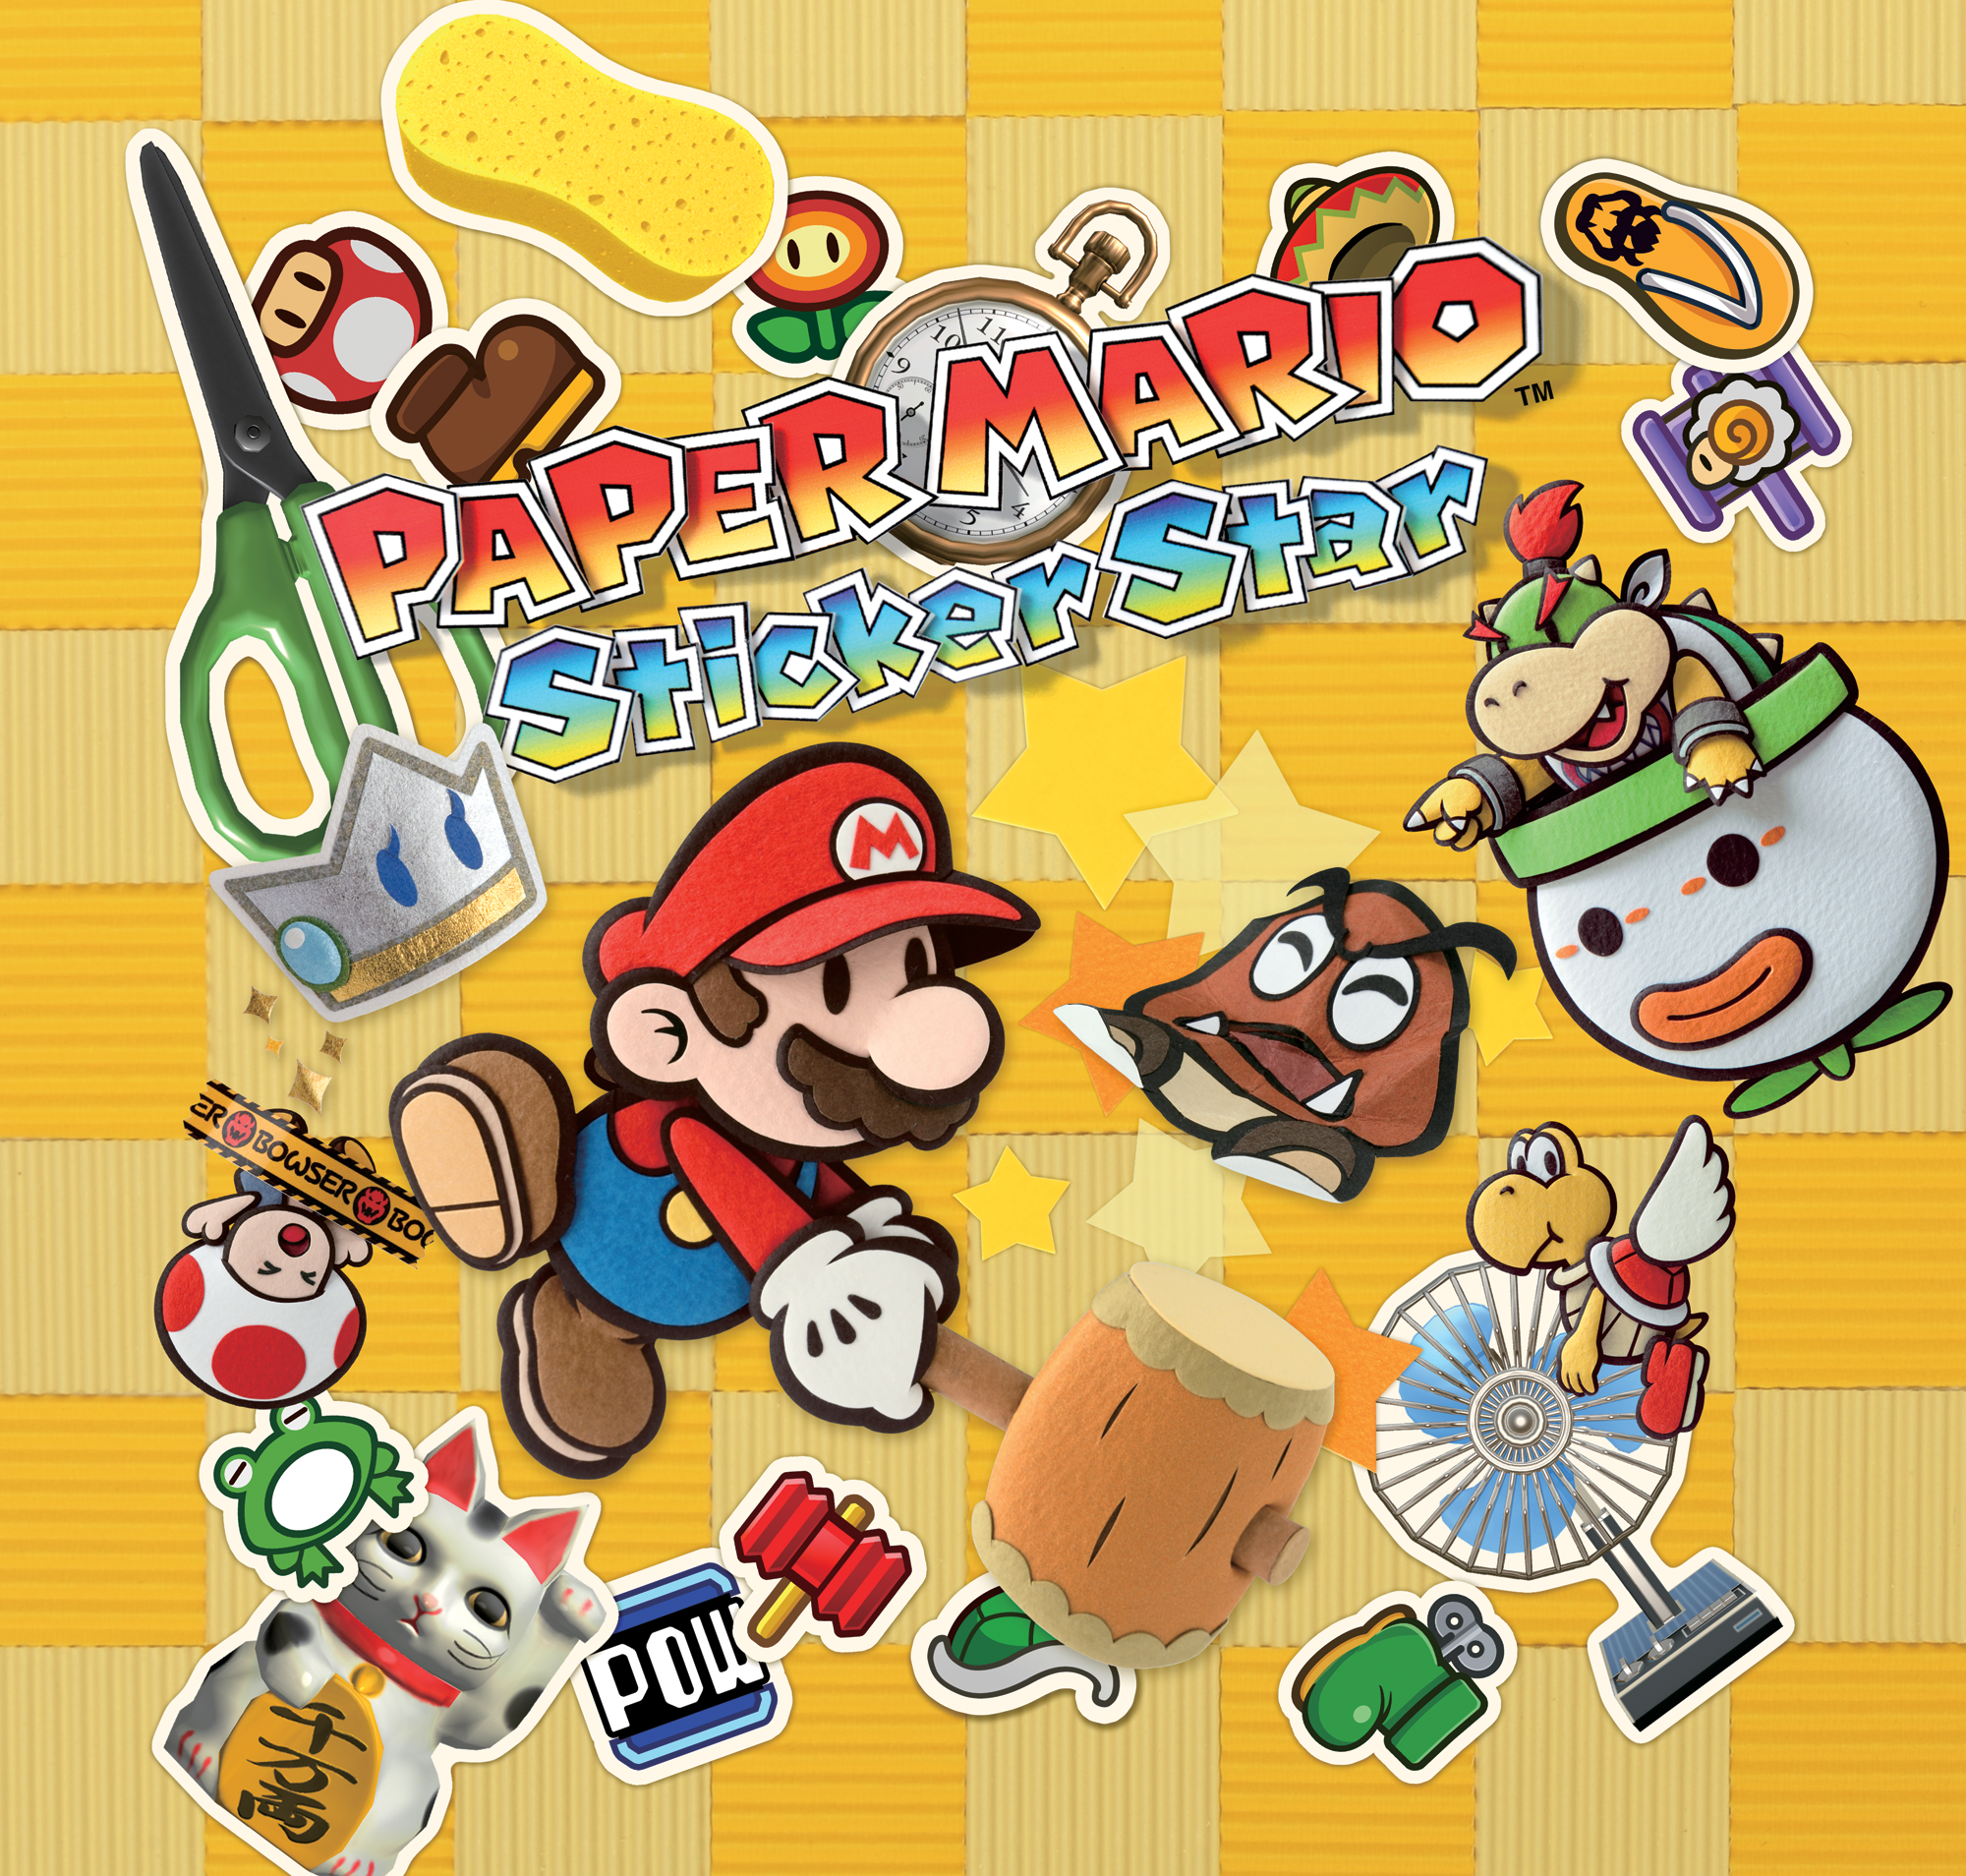 Paper Mario Sticker Star Cover Plain